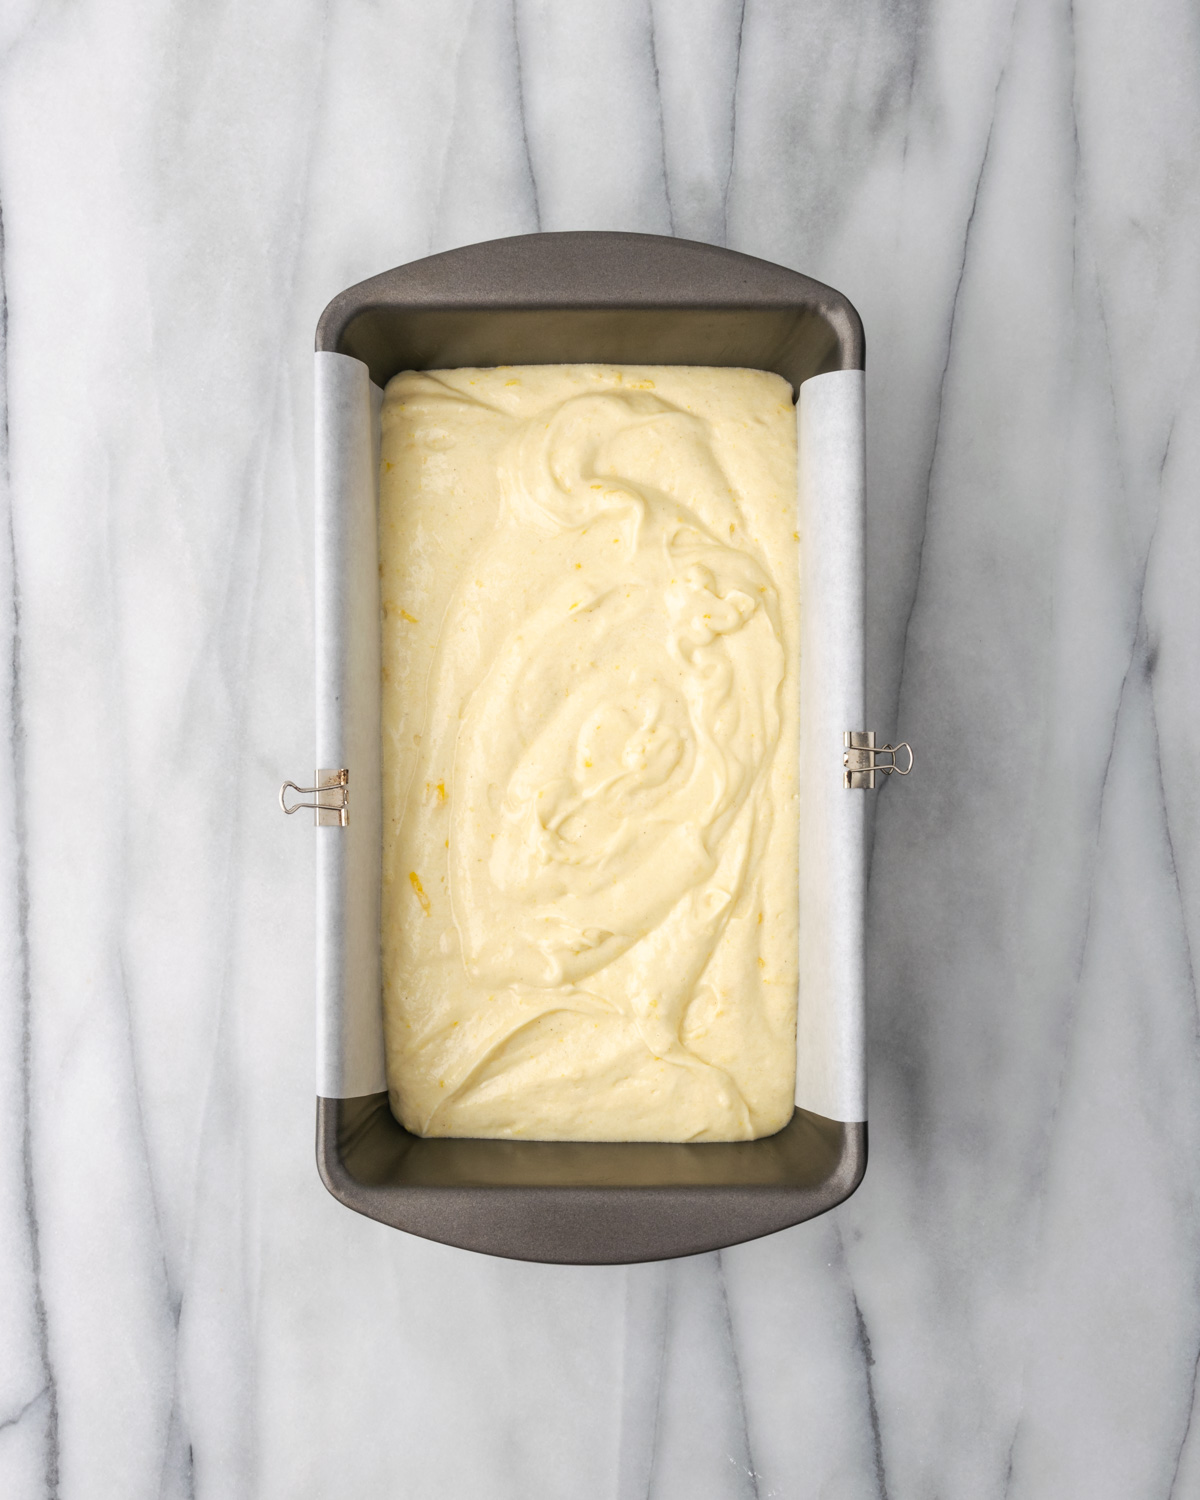 Lemon cake batter spread into a 9x5 loaf pan.